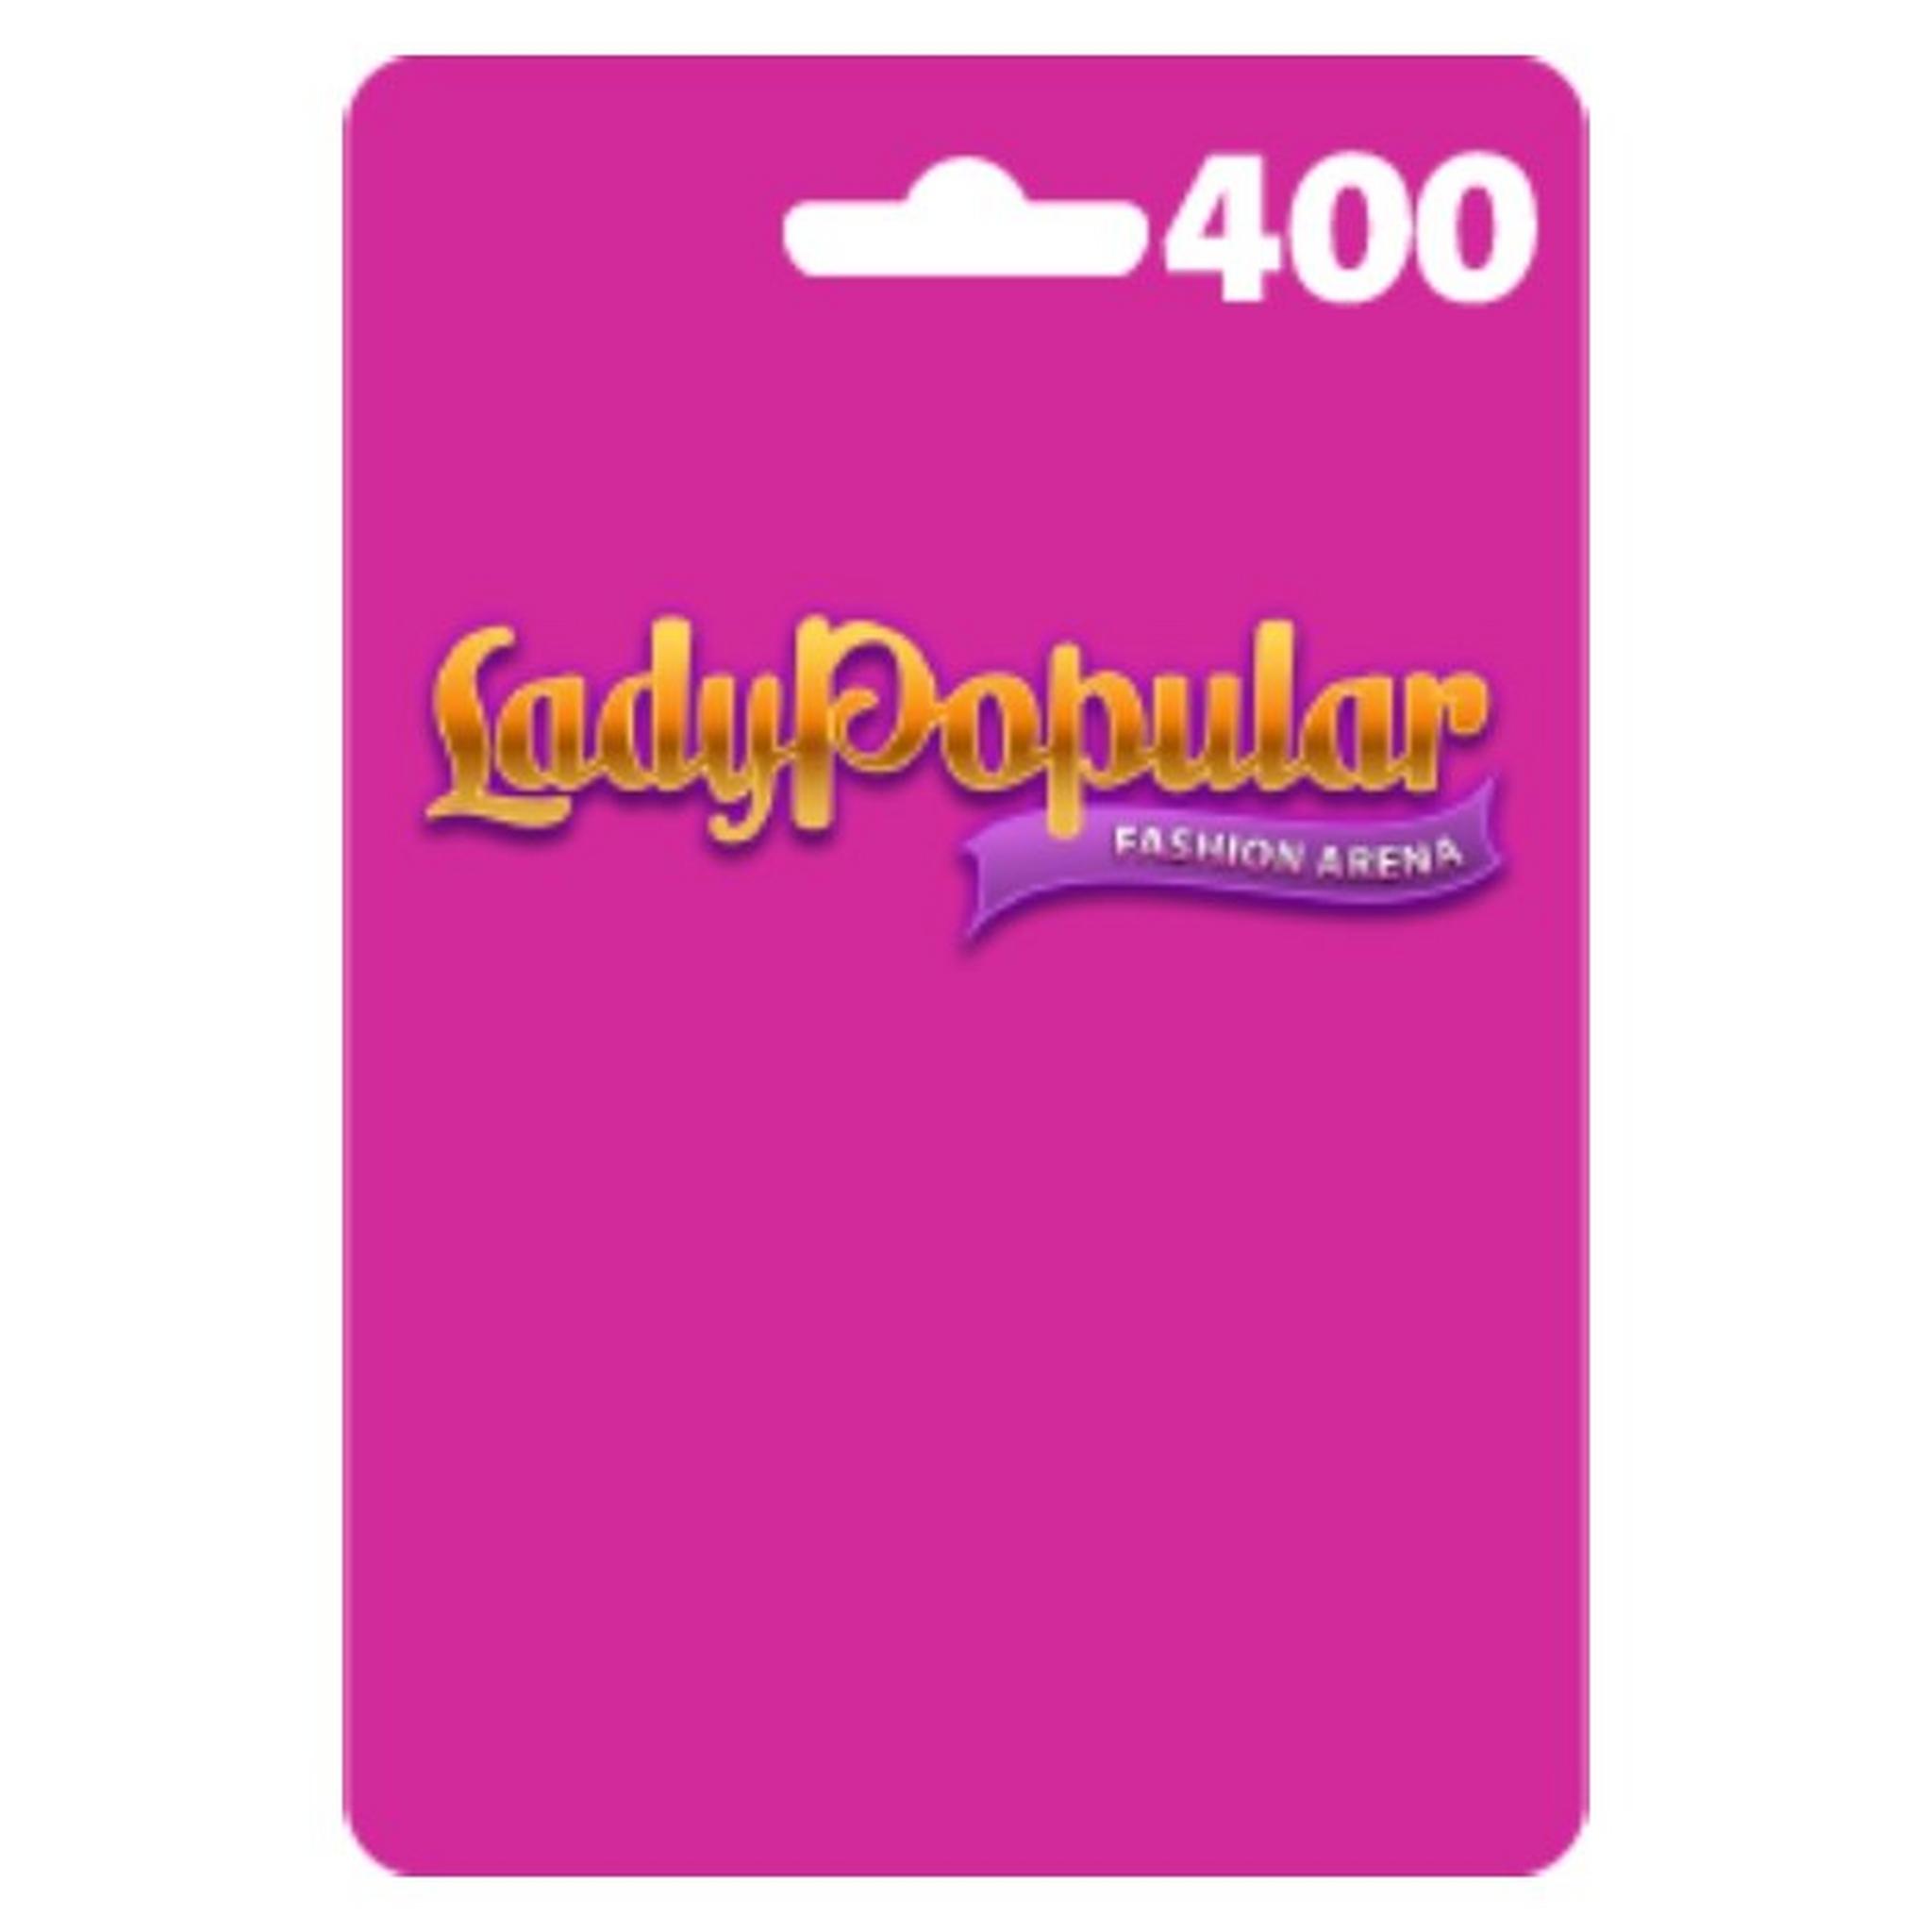 Lady Popular Card 400 Diamonds